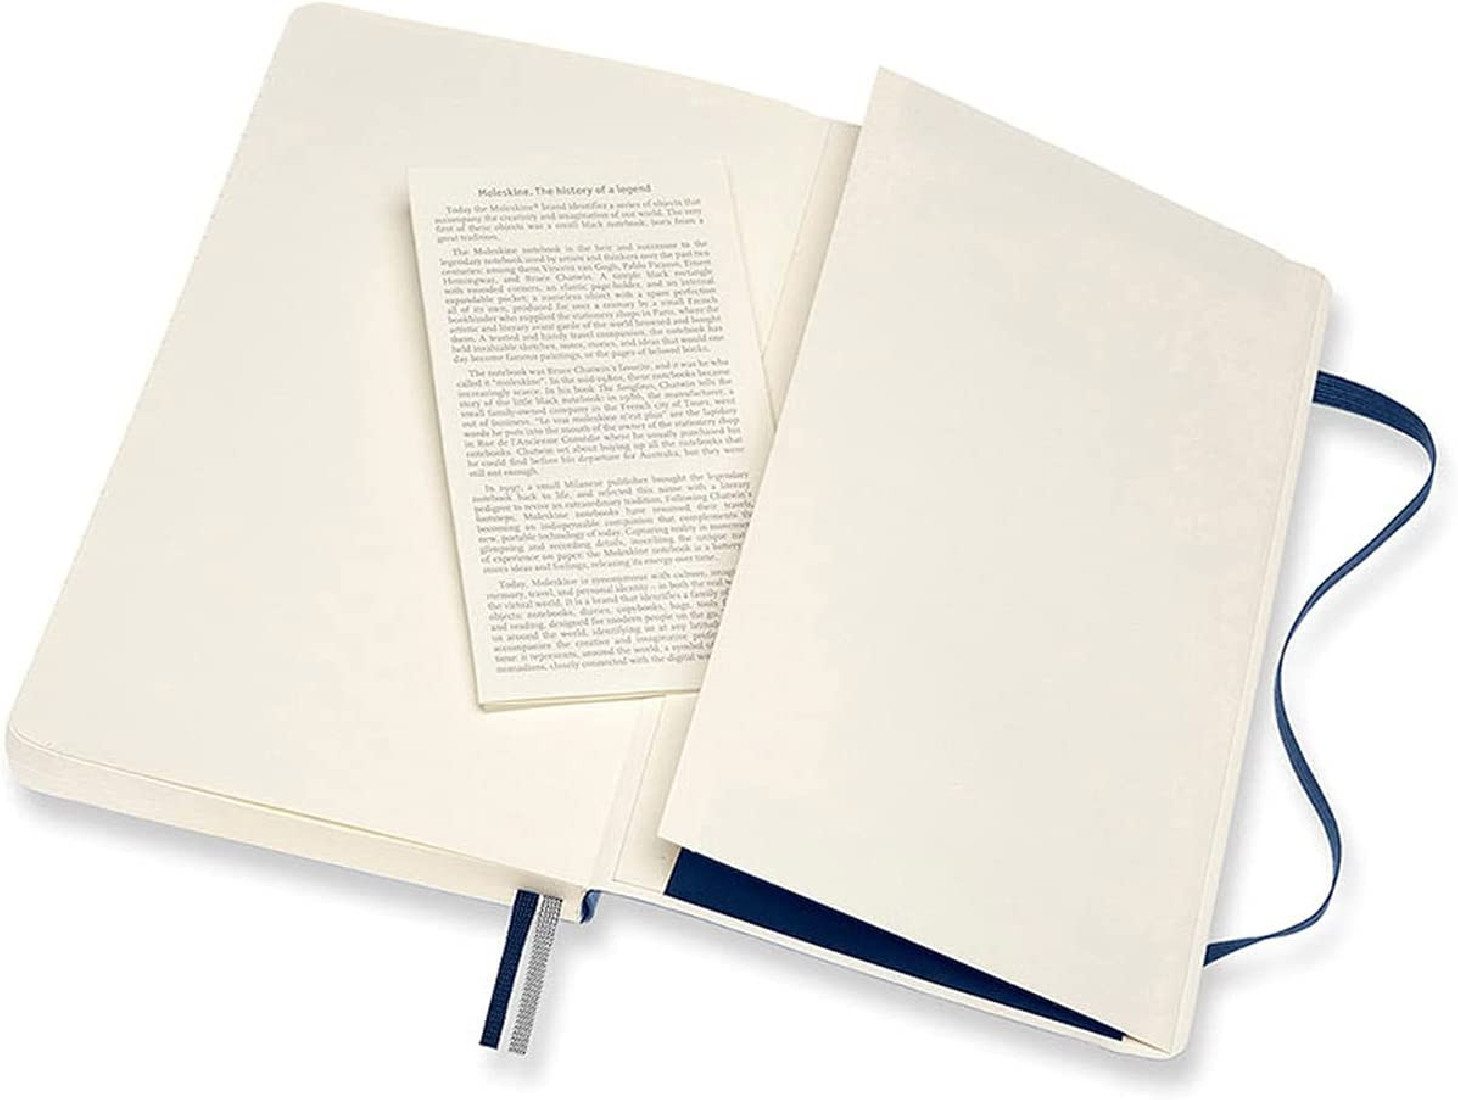 Notebook Large 13x21 Plain Expanded Version Sapphire Blue Soft Cover Moleskine